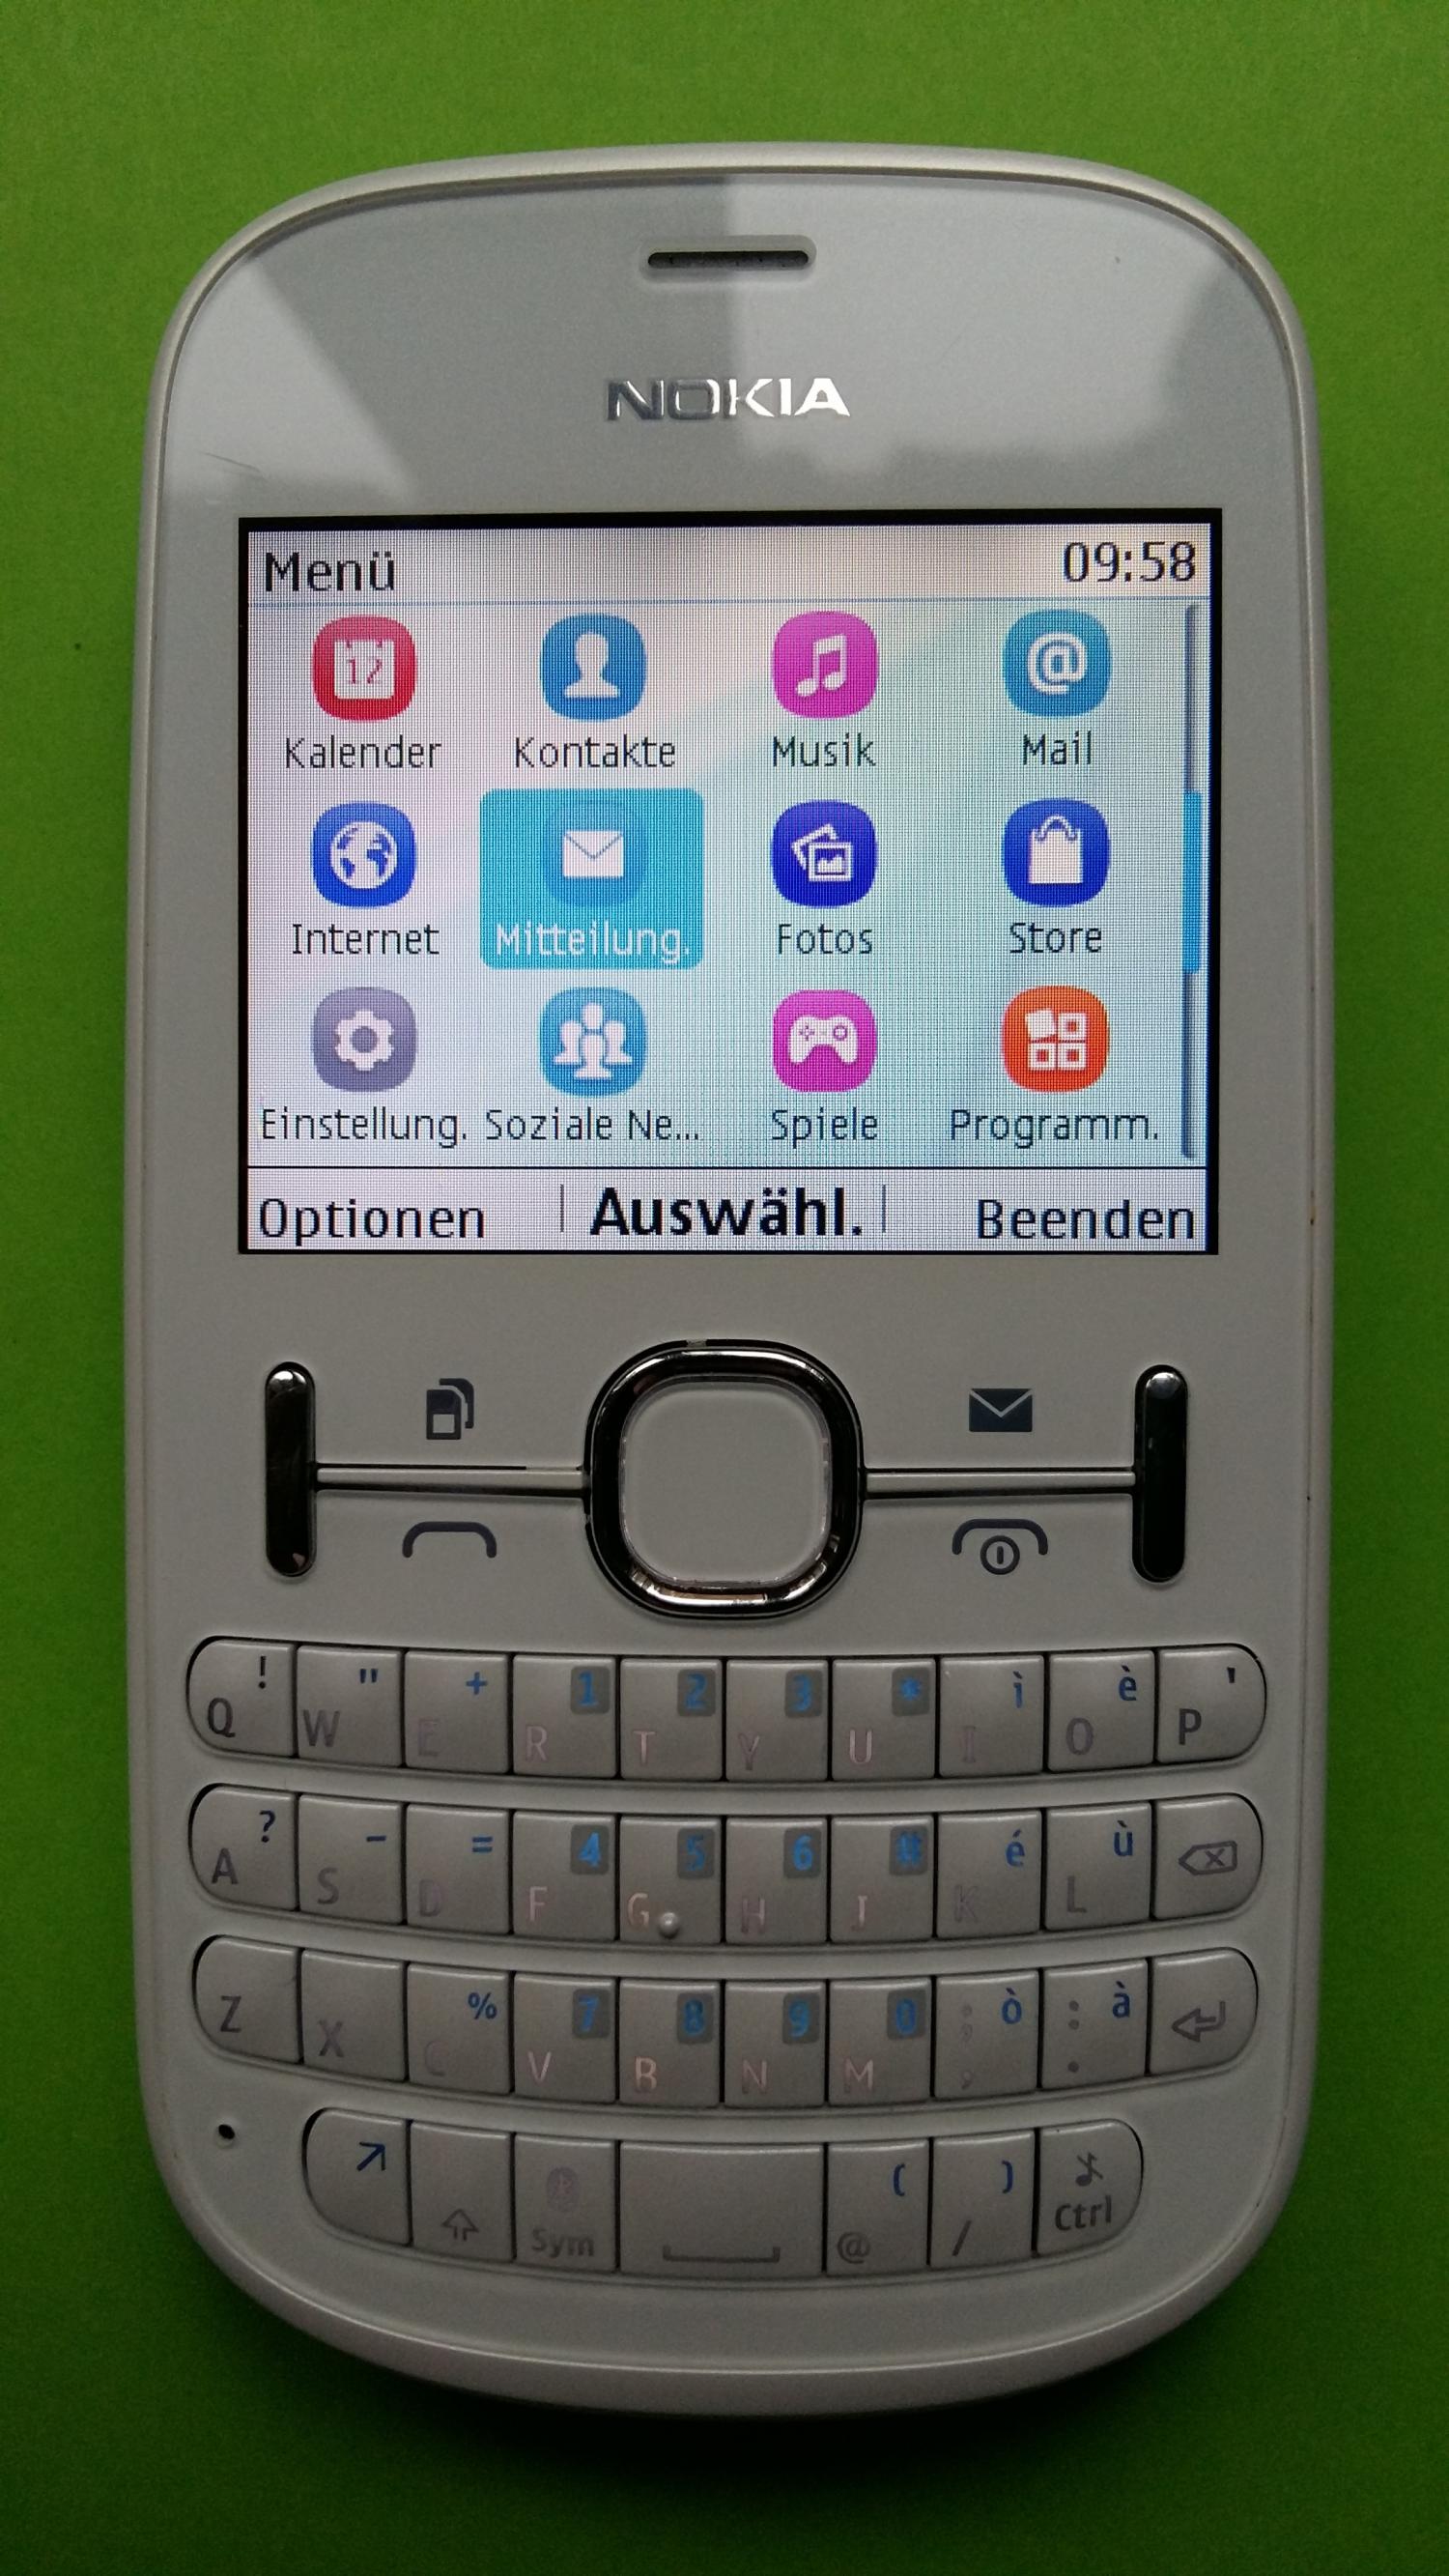 image-7299027-Nokia 200 Asha (2)1.jpg